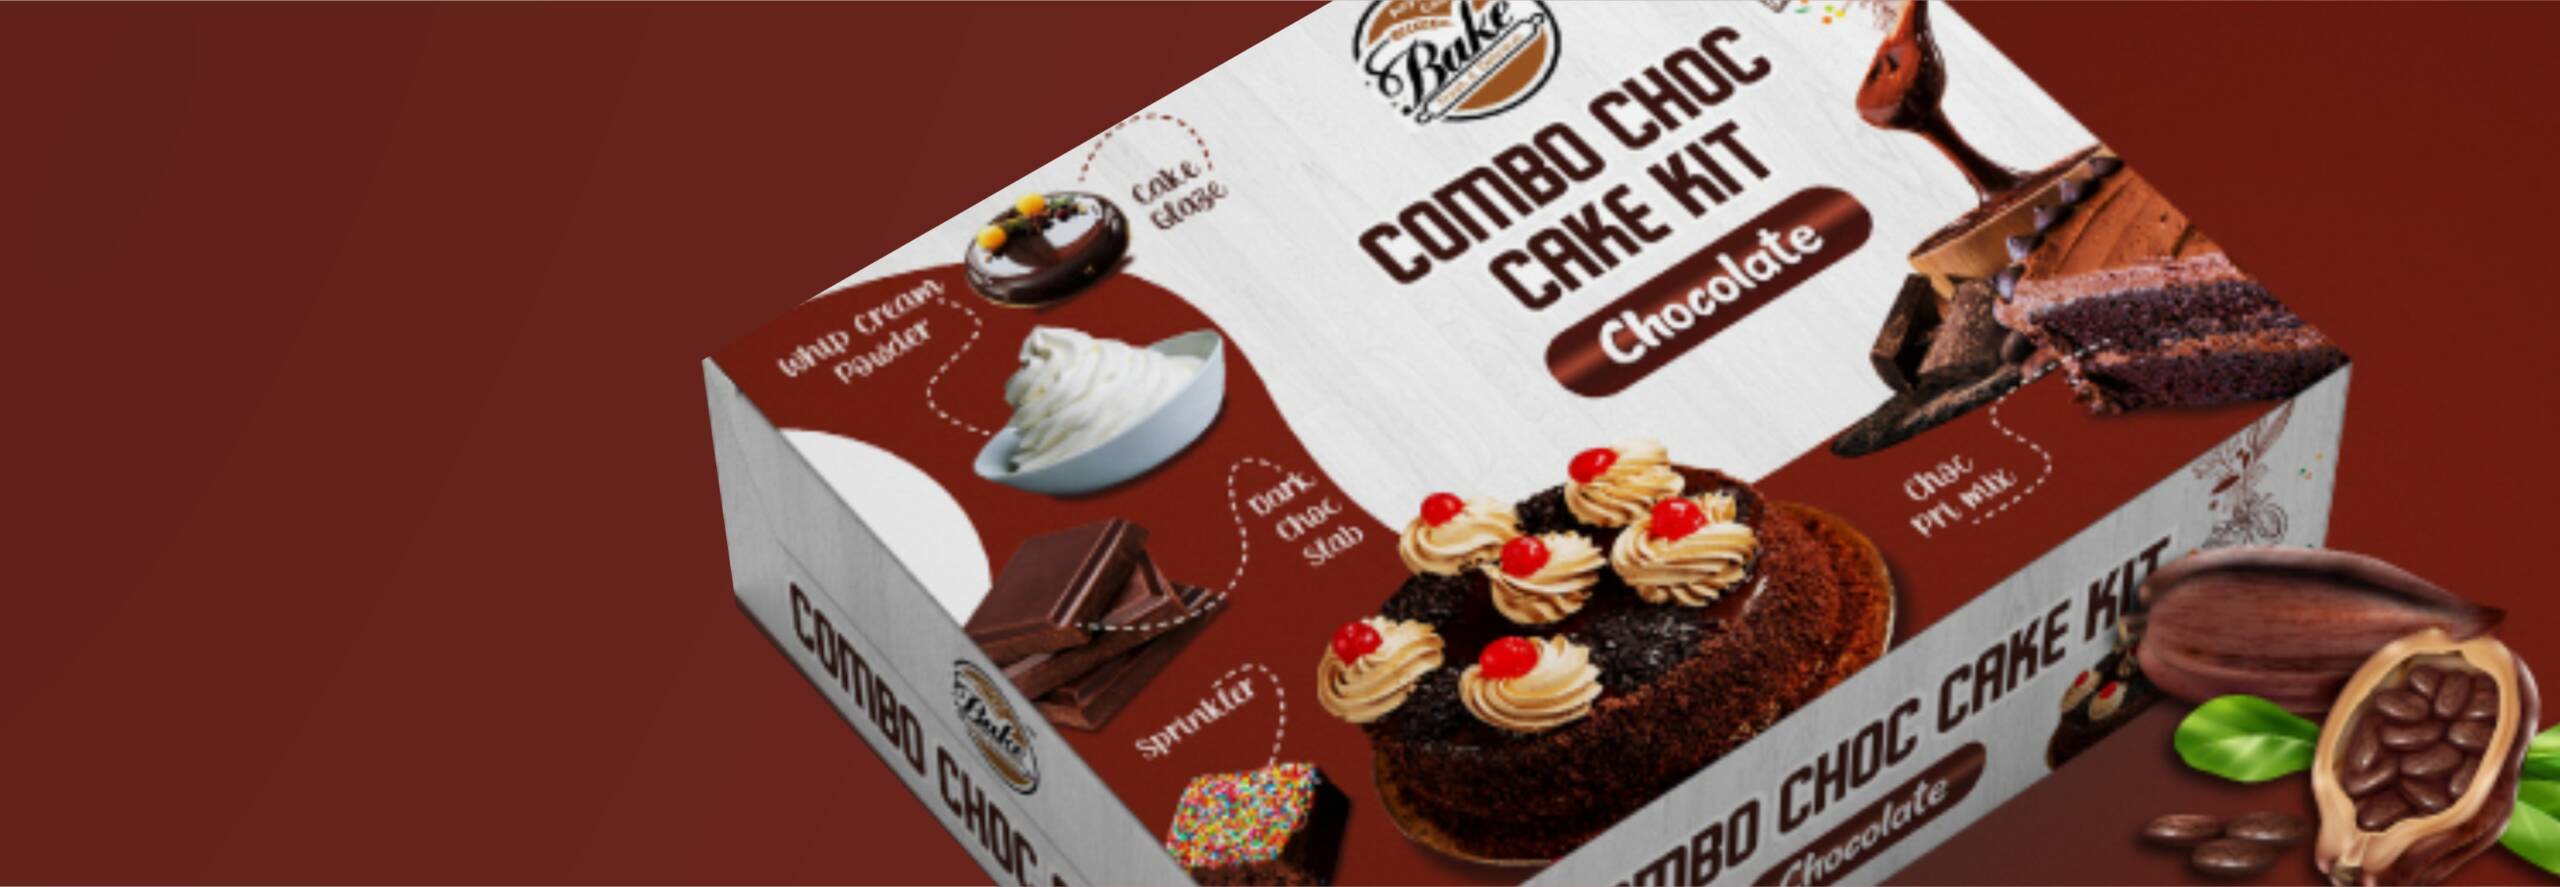 colate & bake - Box Packaging design